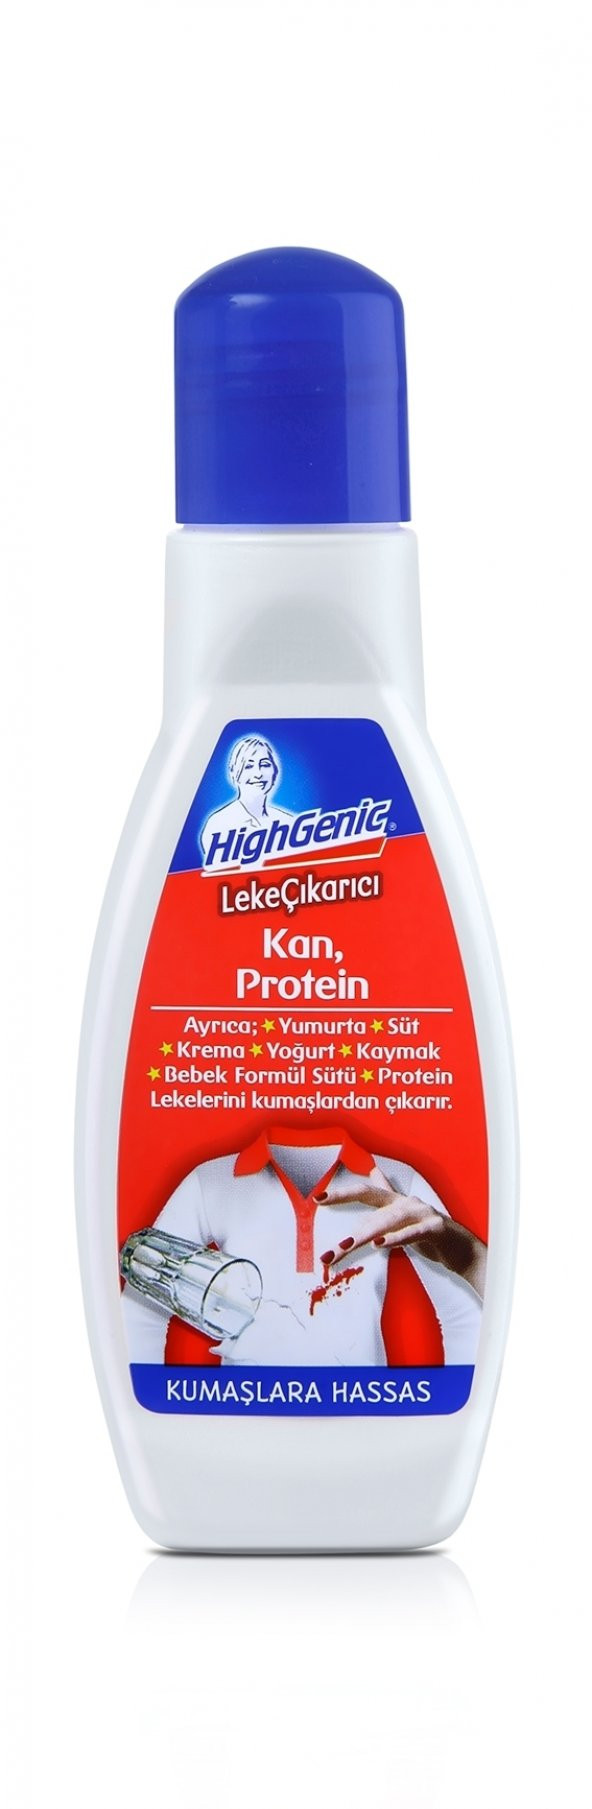 highgenic kan ve protein leke çikarici 50 ml hg3713